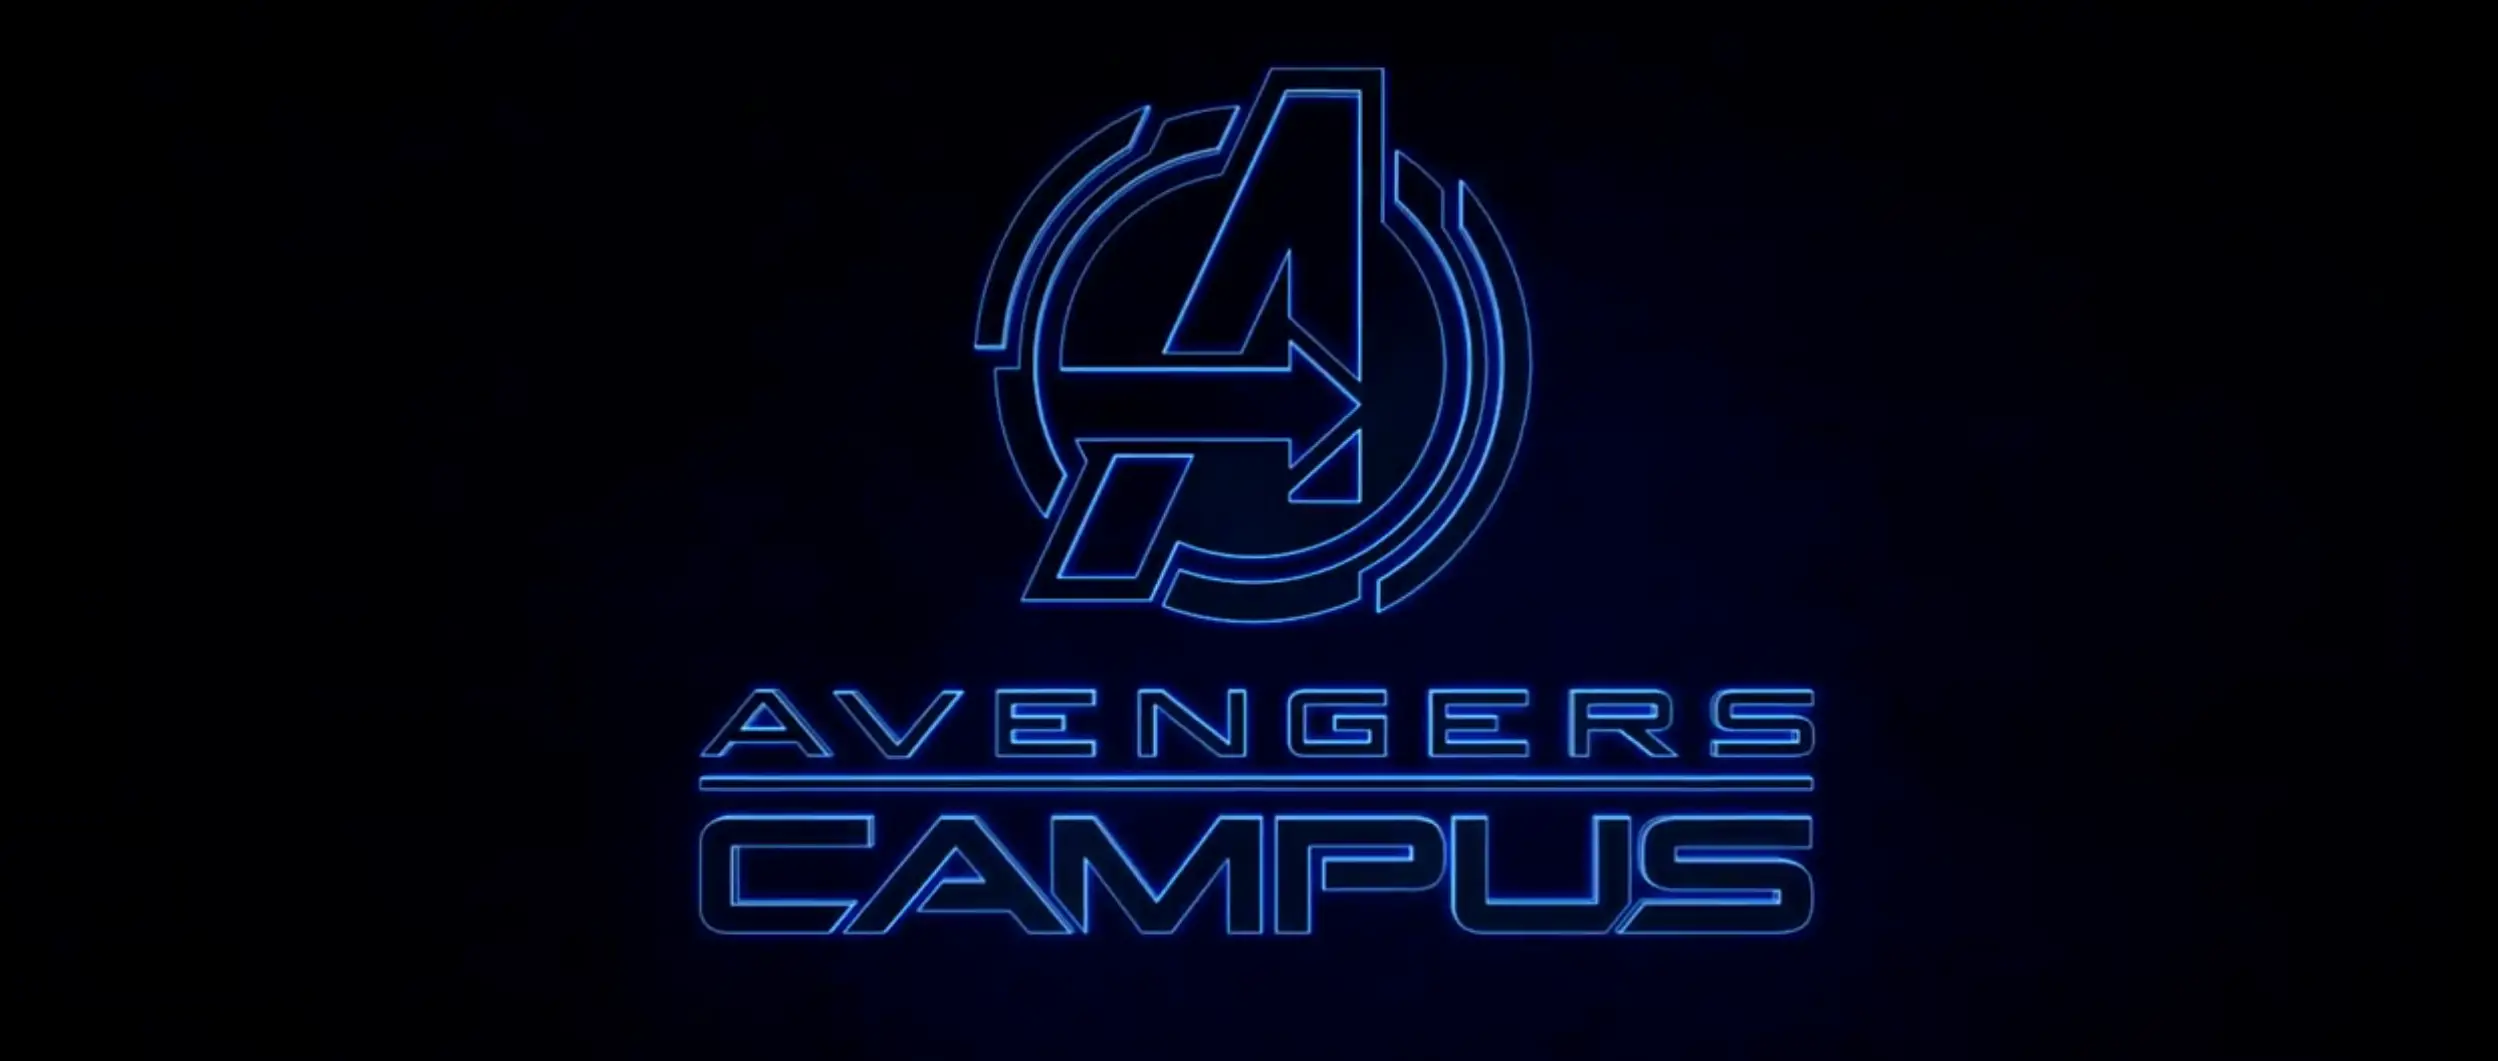 Avengers Campus stuntronic premiere